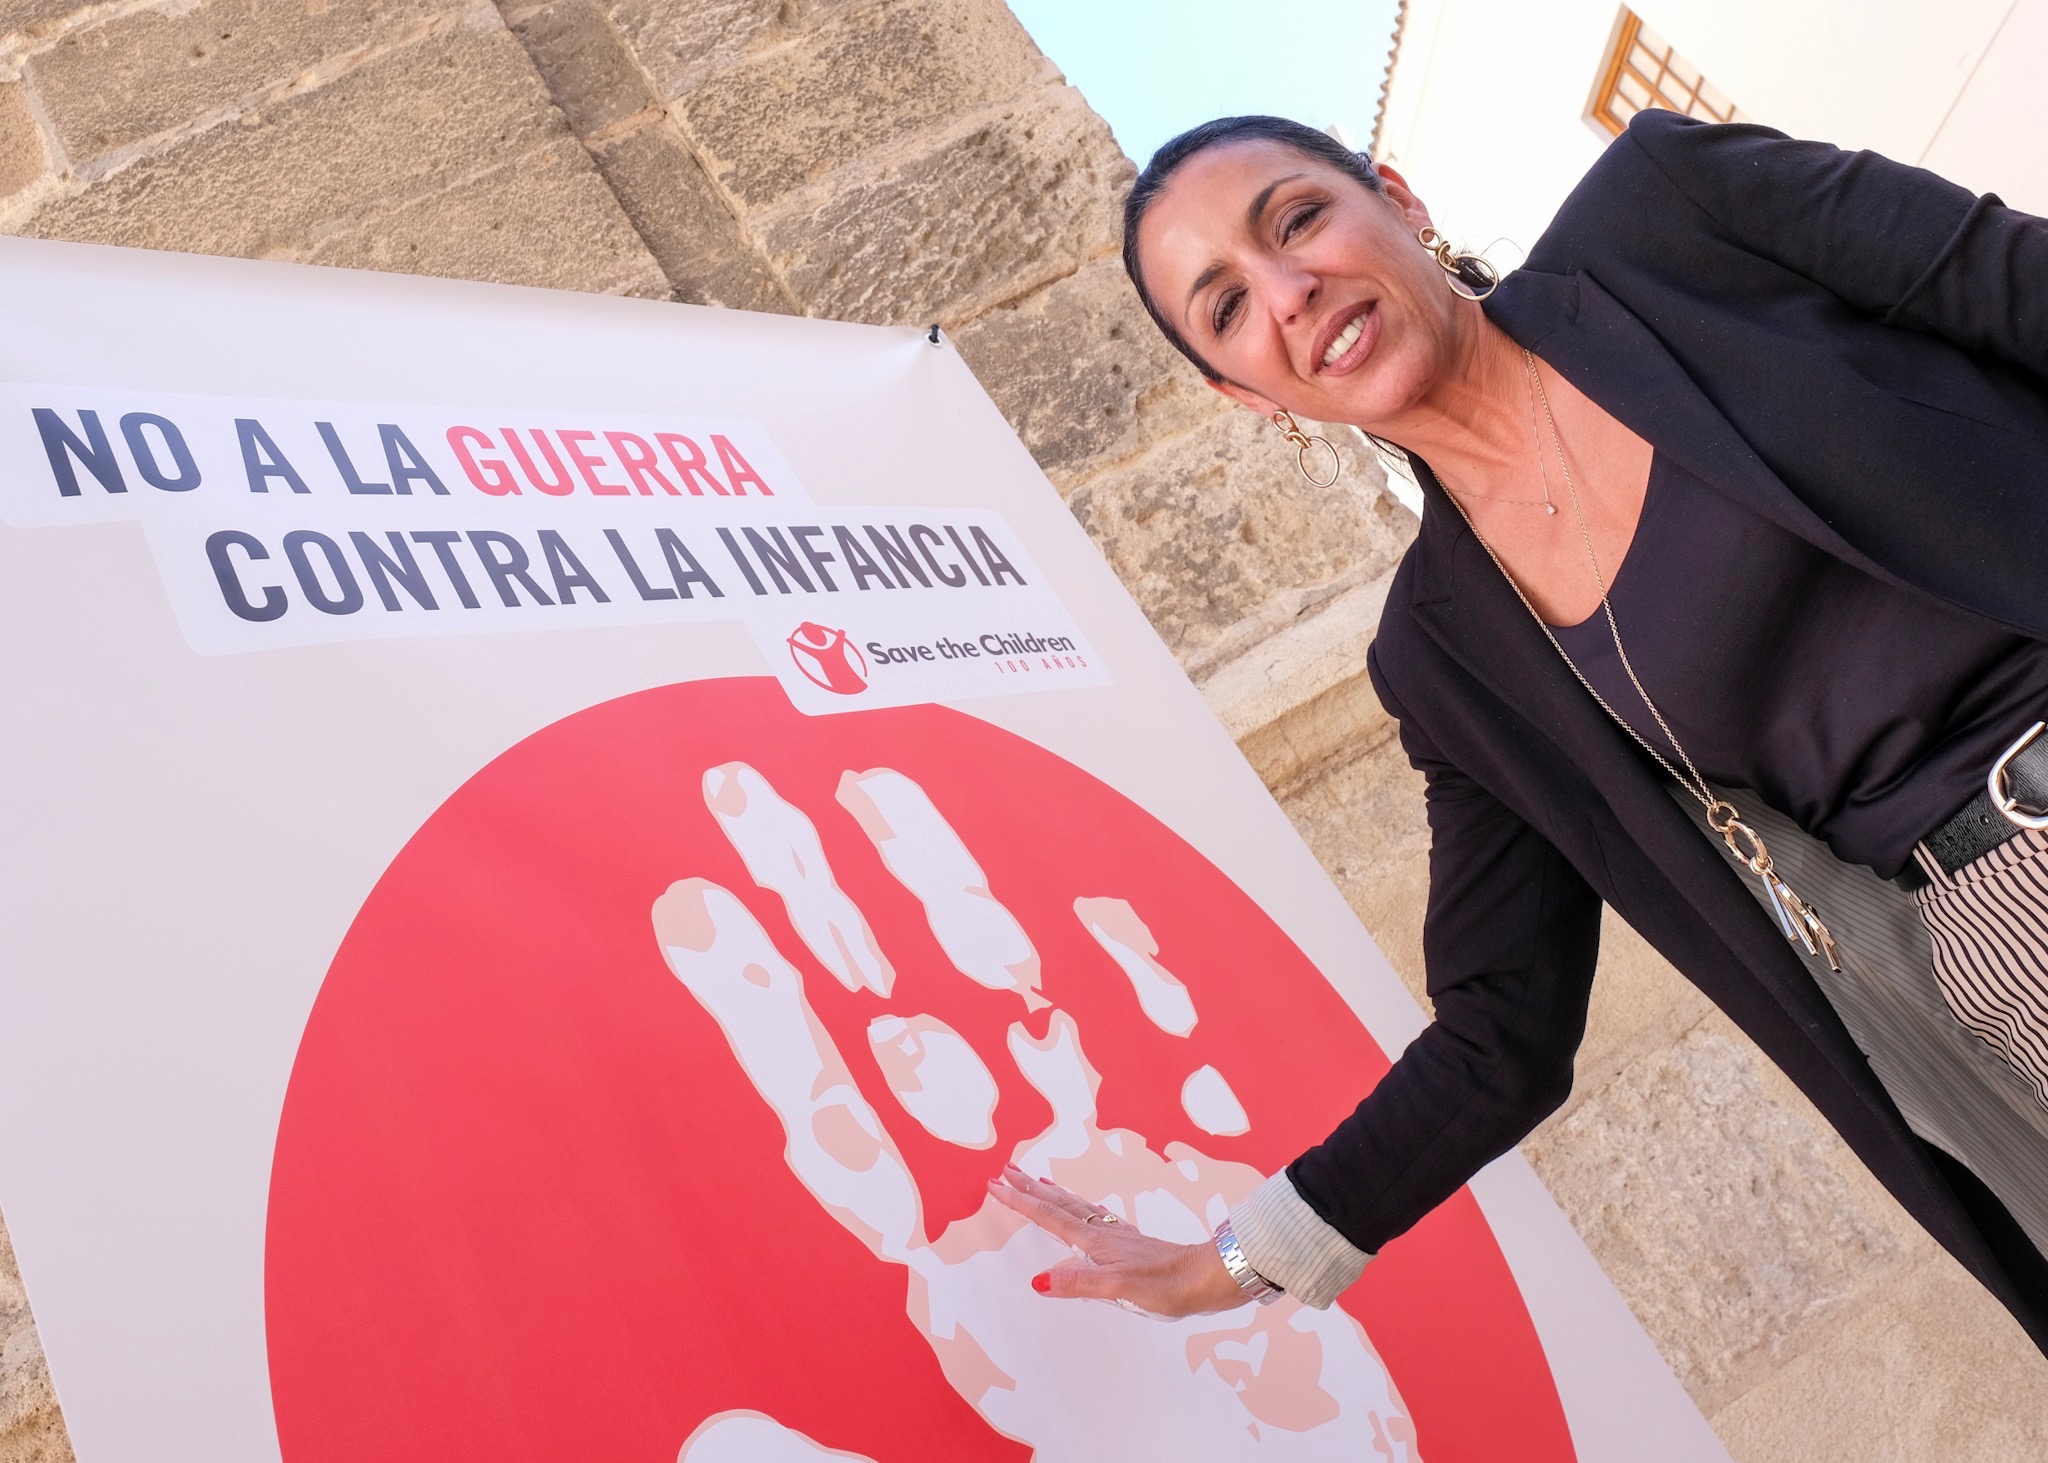  Marta Bosquet junto al cartel de la campaa "No a la guerra contra la Infancia"